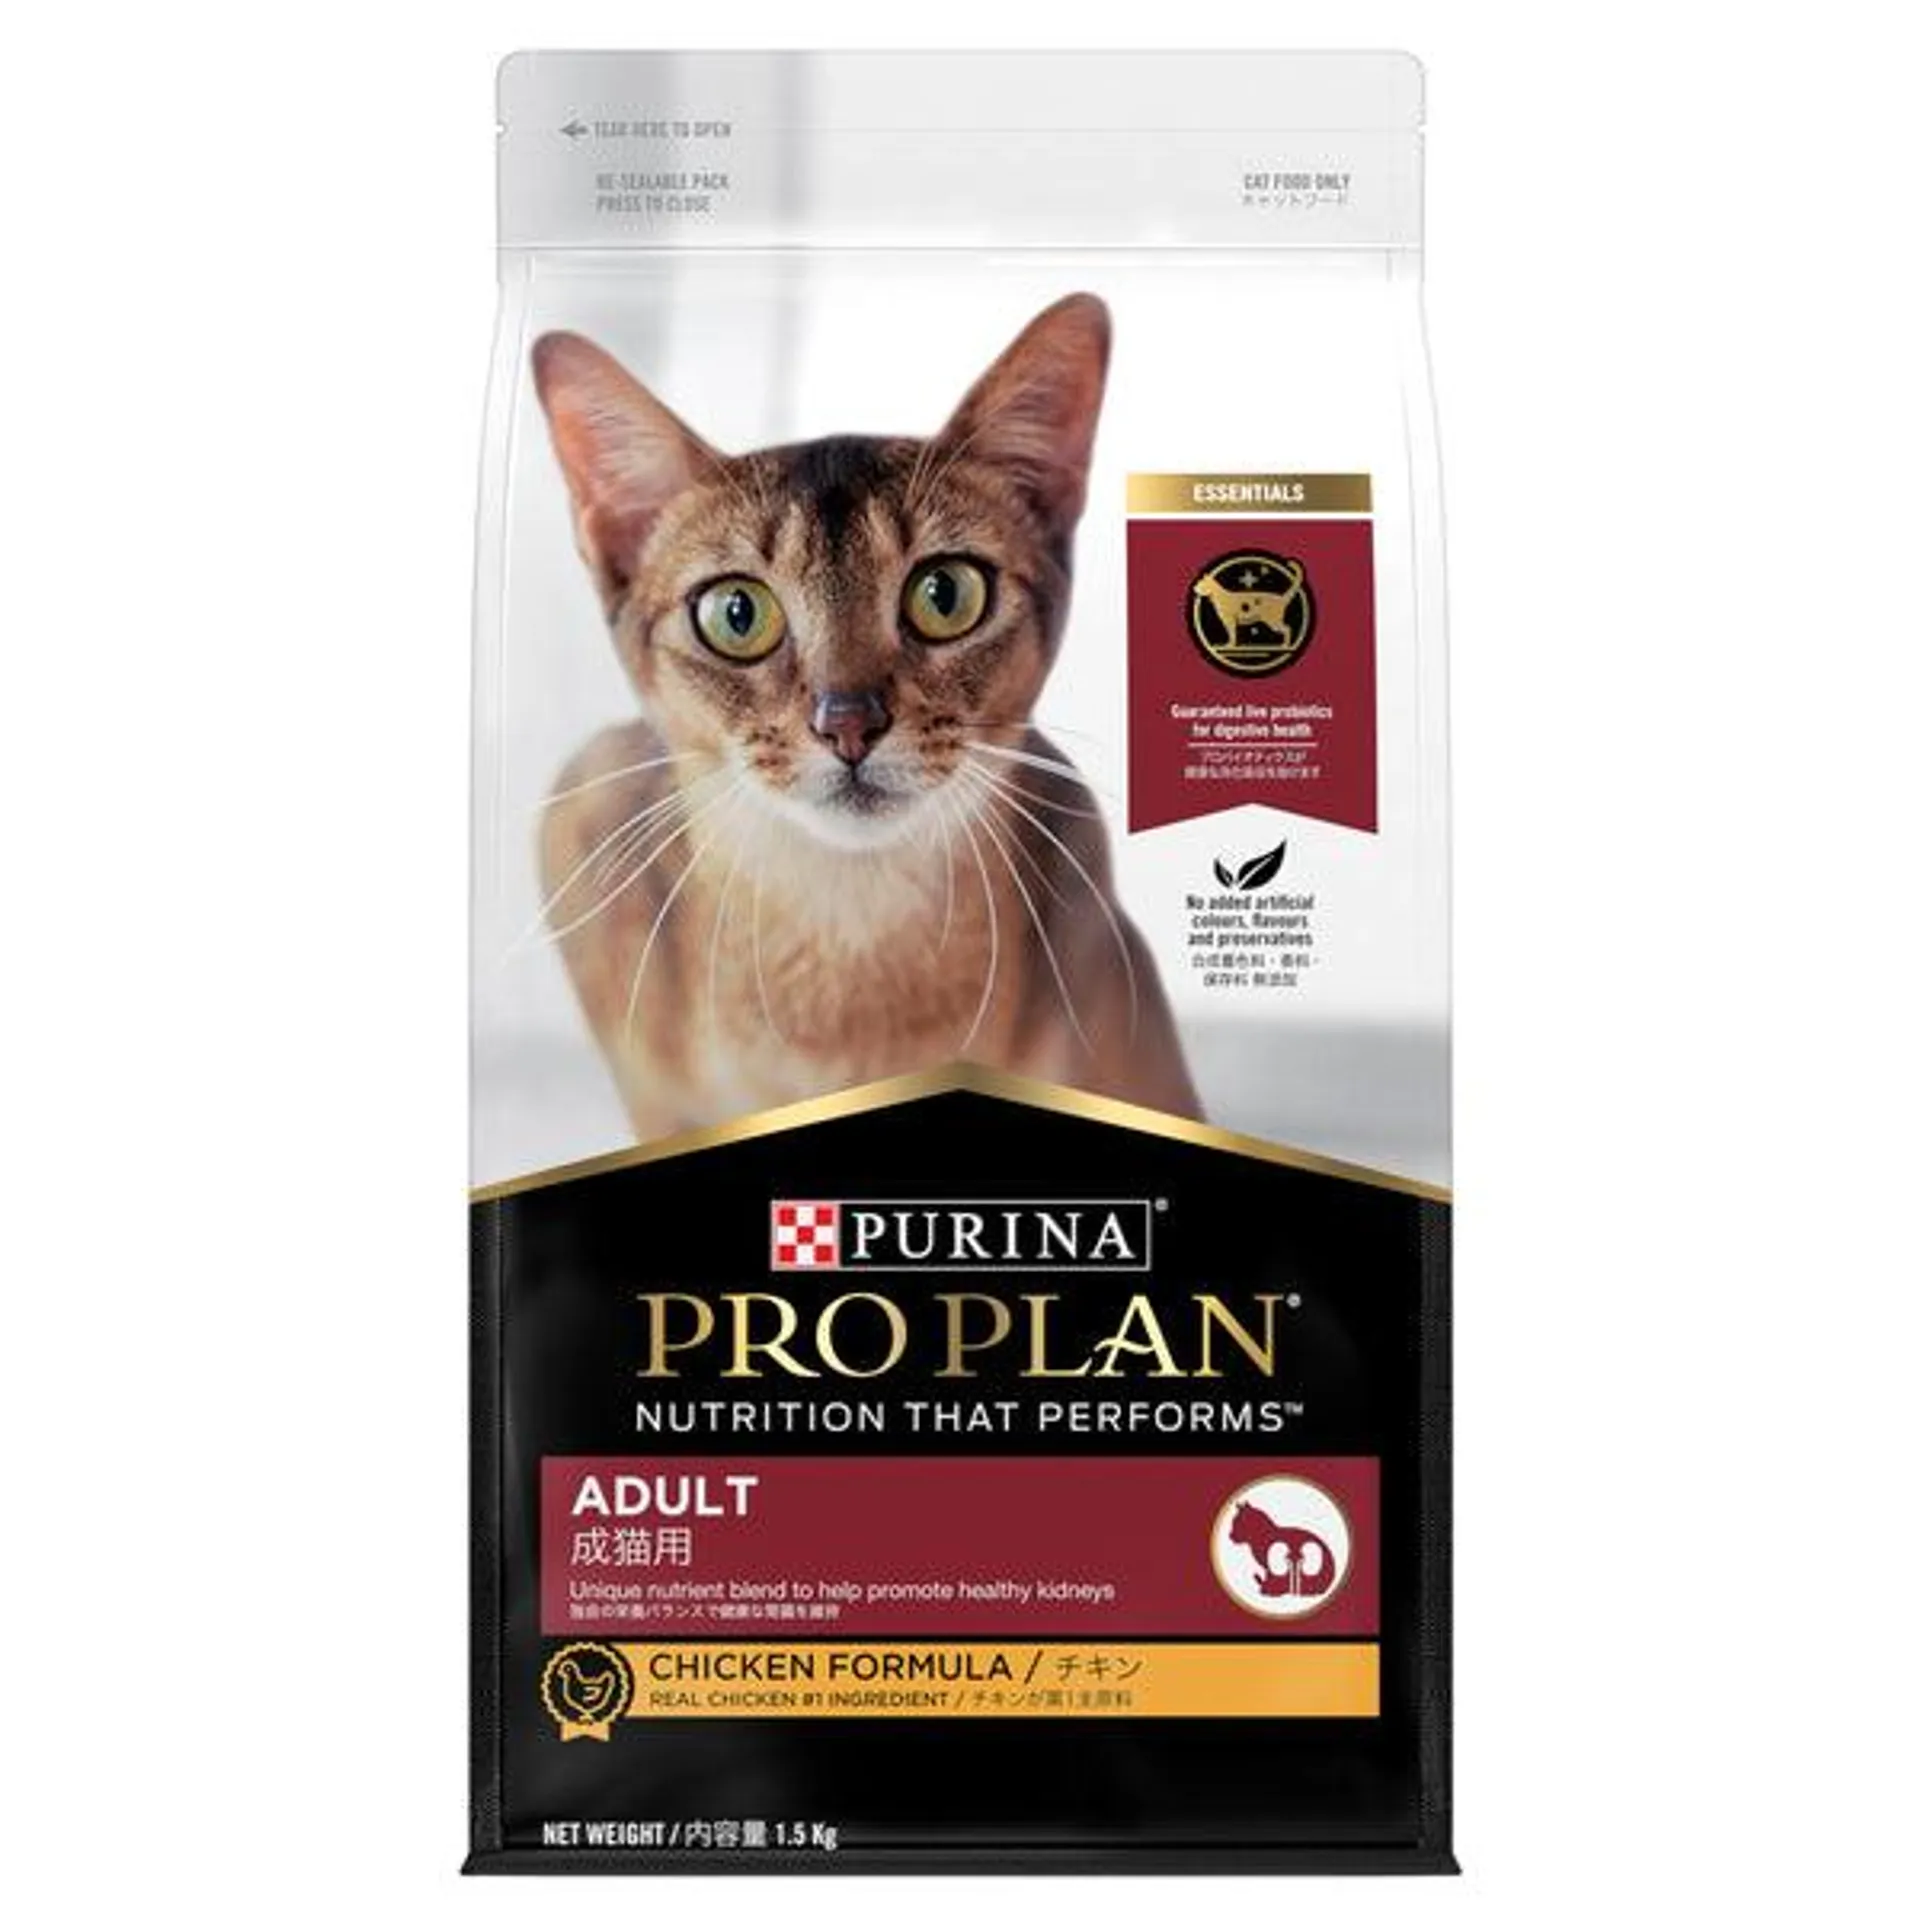 PRO PLAN - Adult Chicken Formula Cat Dry Food